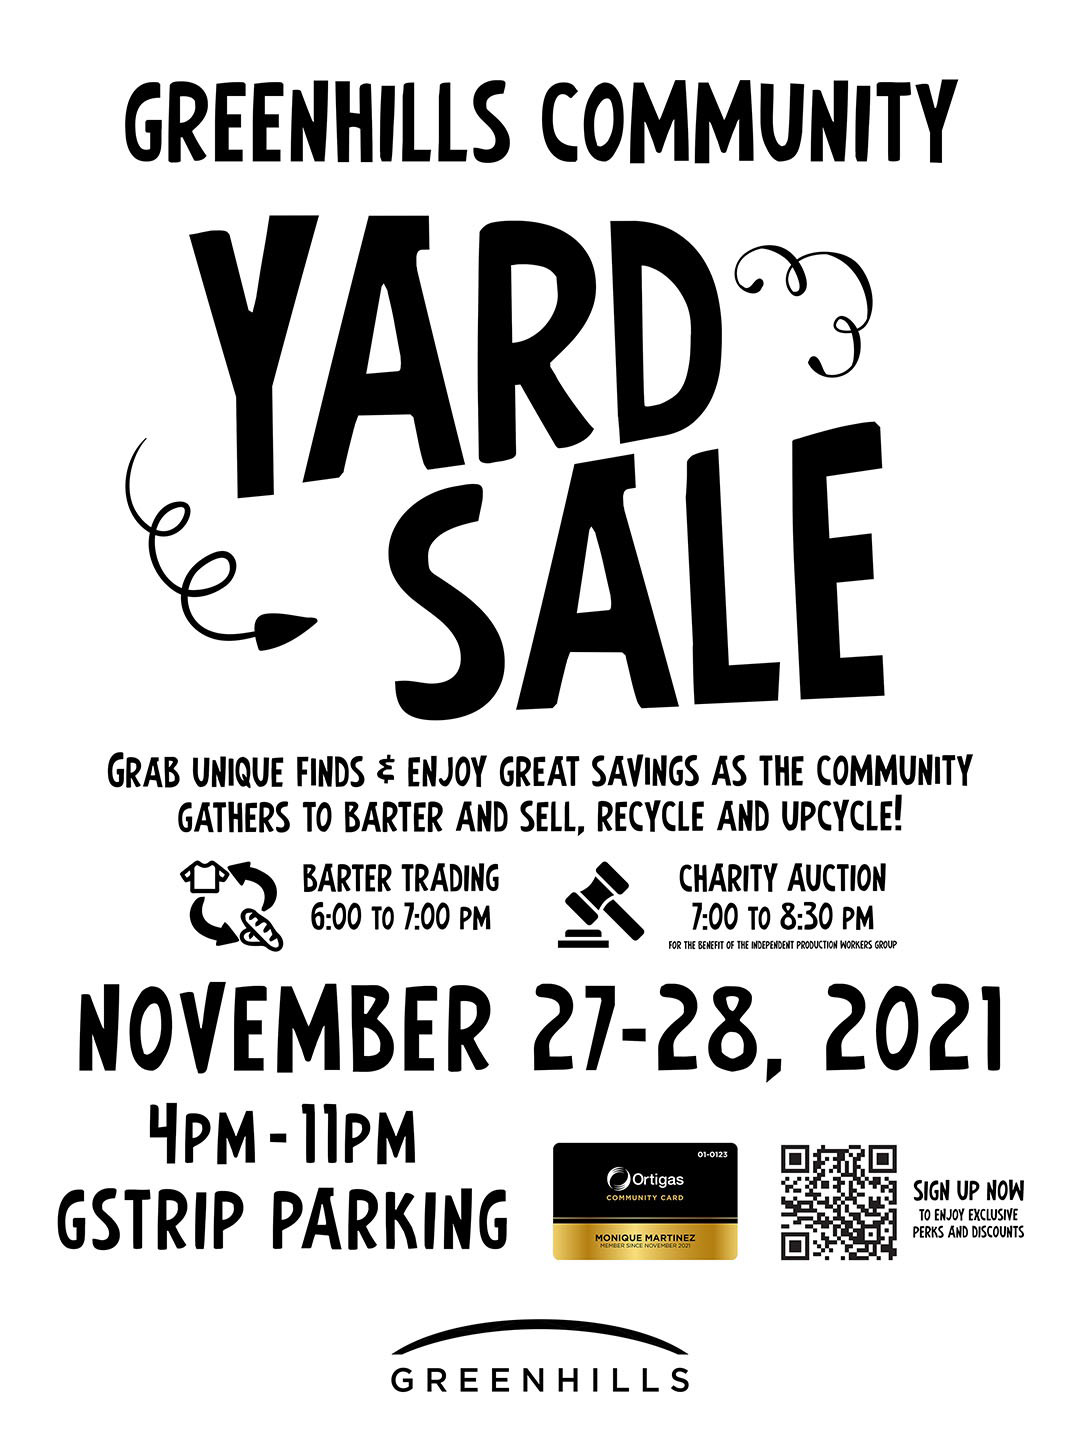 Greenhills Community Yard Sale NOVEMBER 27-28 2021